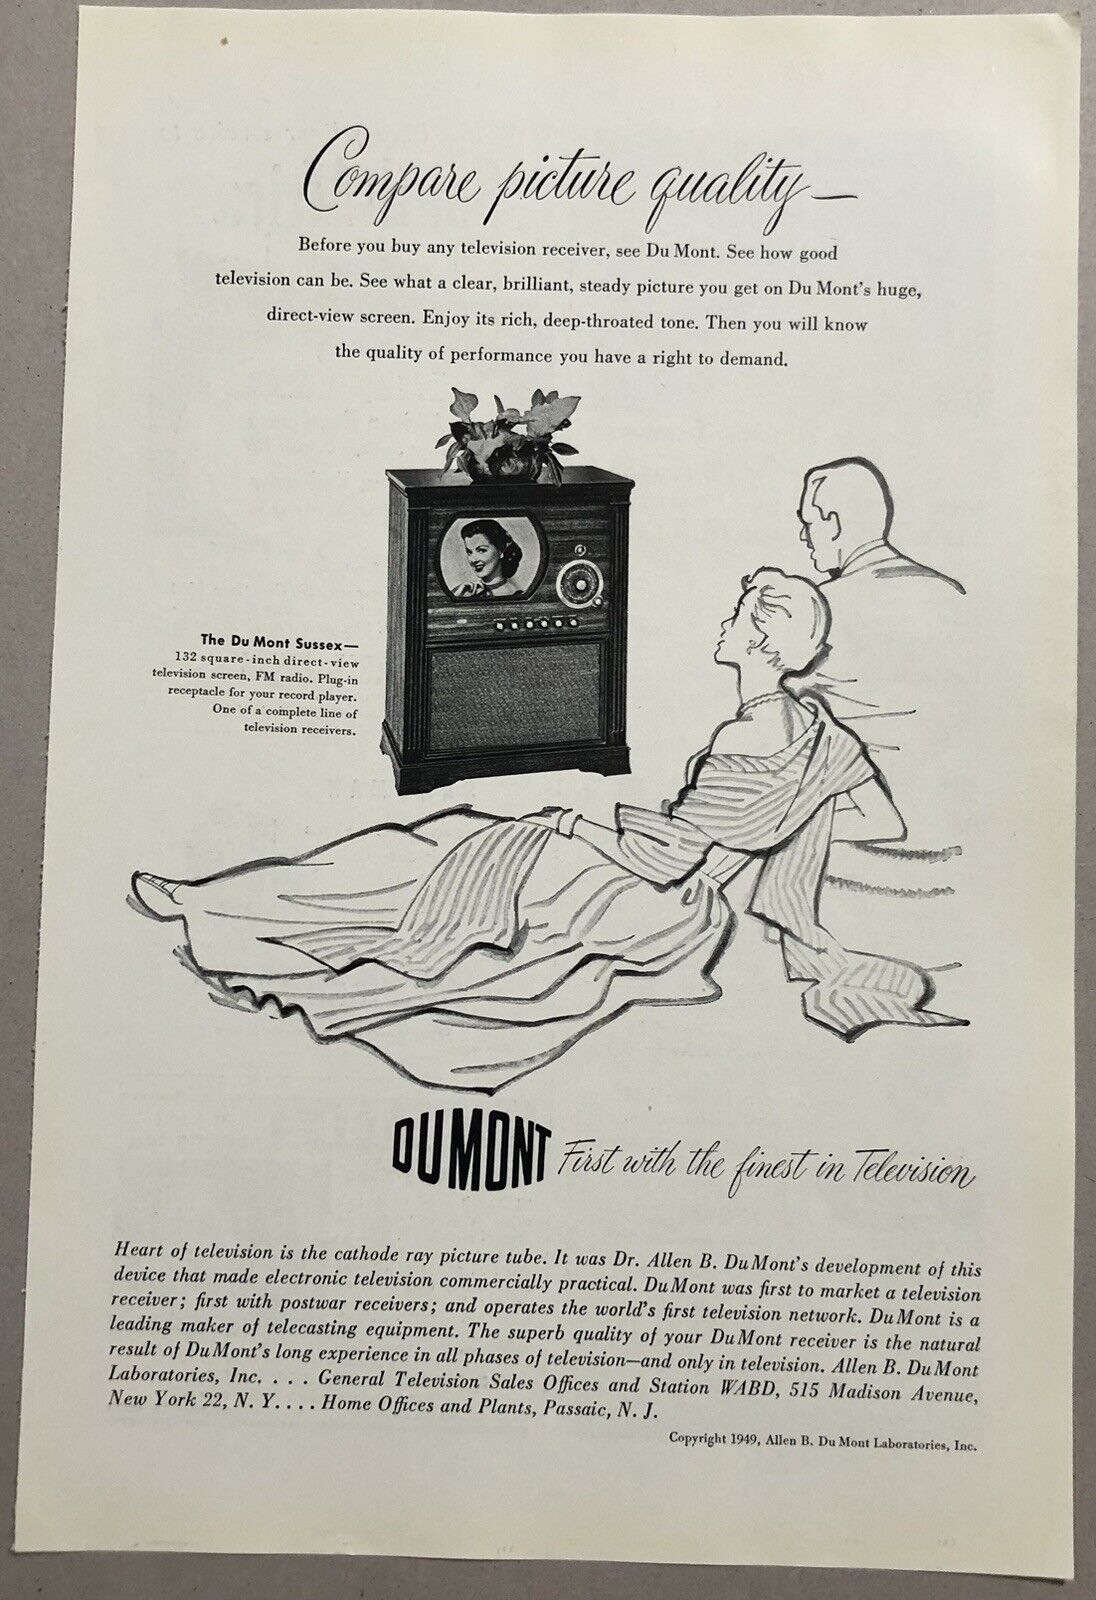 Vintage 1949 Original Print Ad Full Page - Du Mont Compare Picture Quality